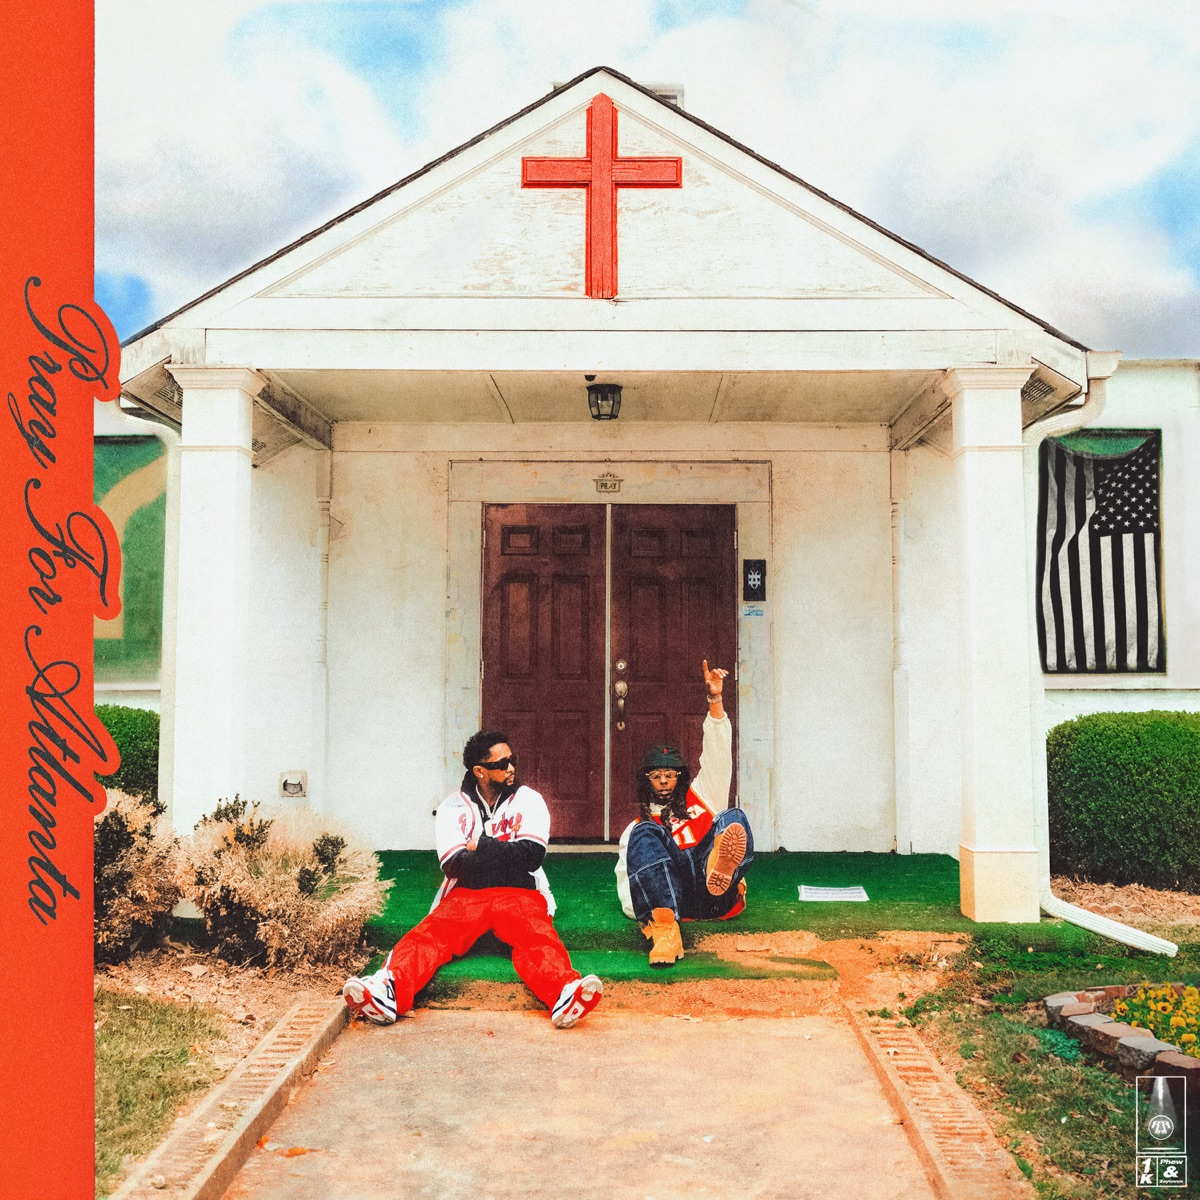 1K Phew & Zaytoven – Pray for Atlanta Album Download